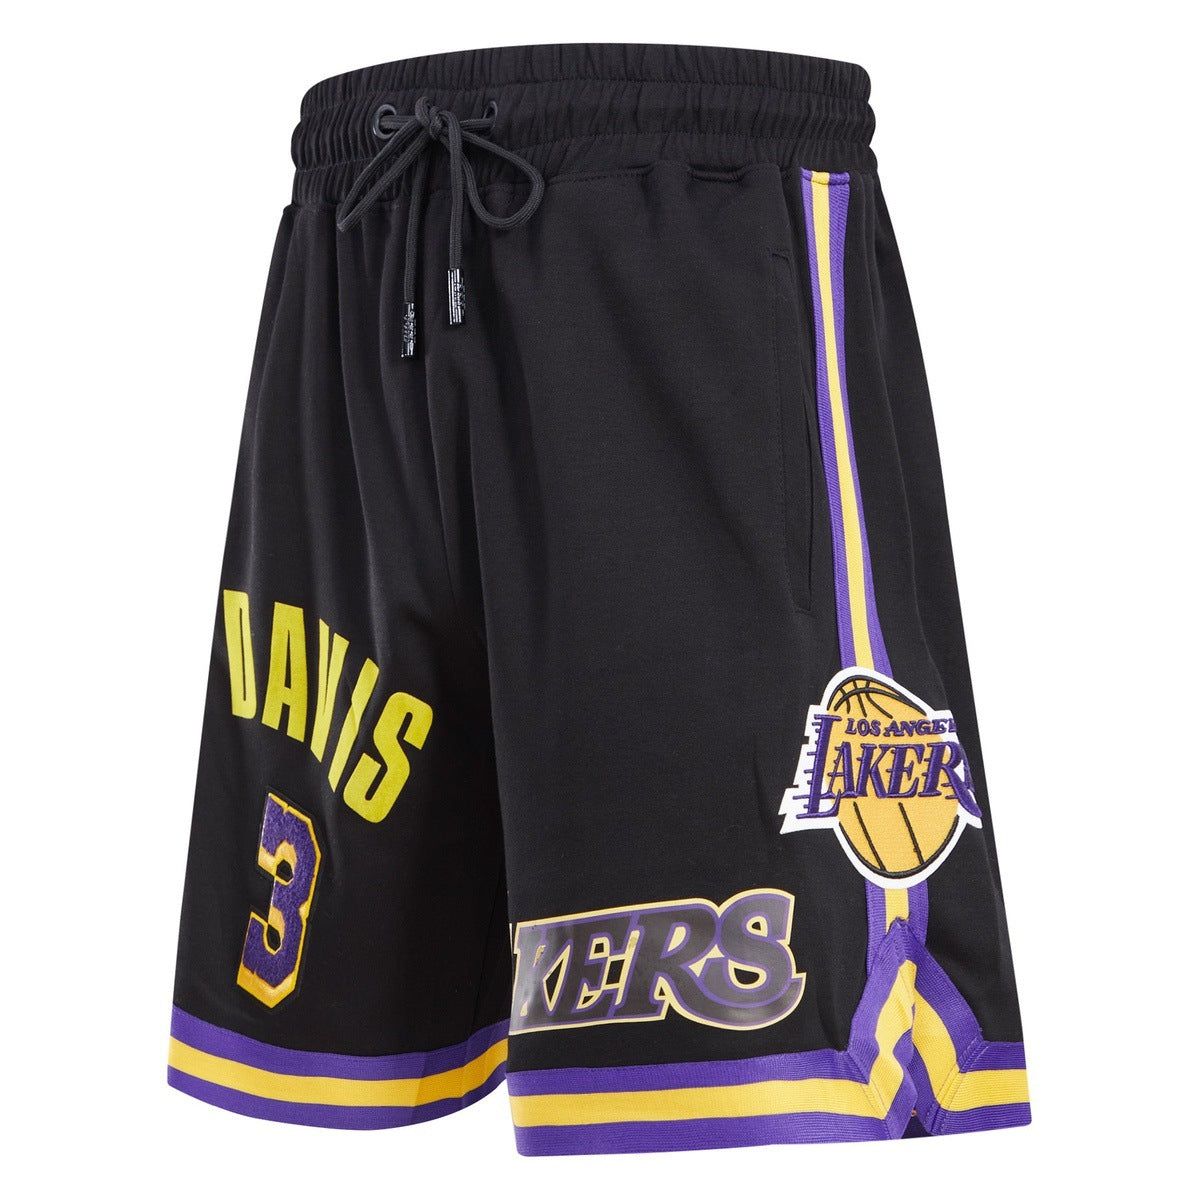 Men's Pro Standard Black NBA Los Angeles Lakers Pro Team Shorts